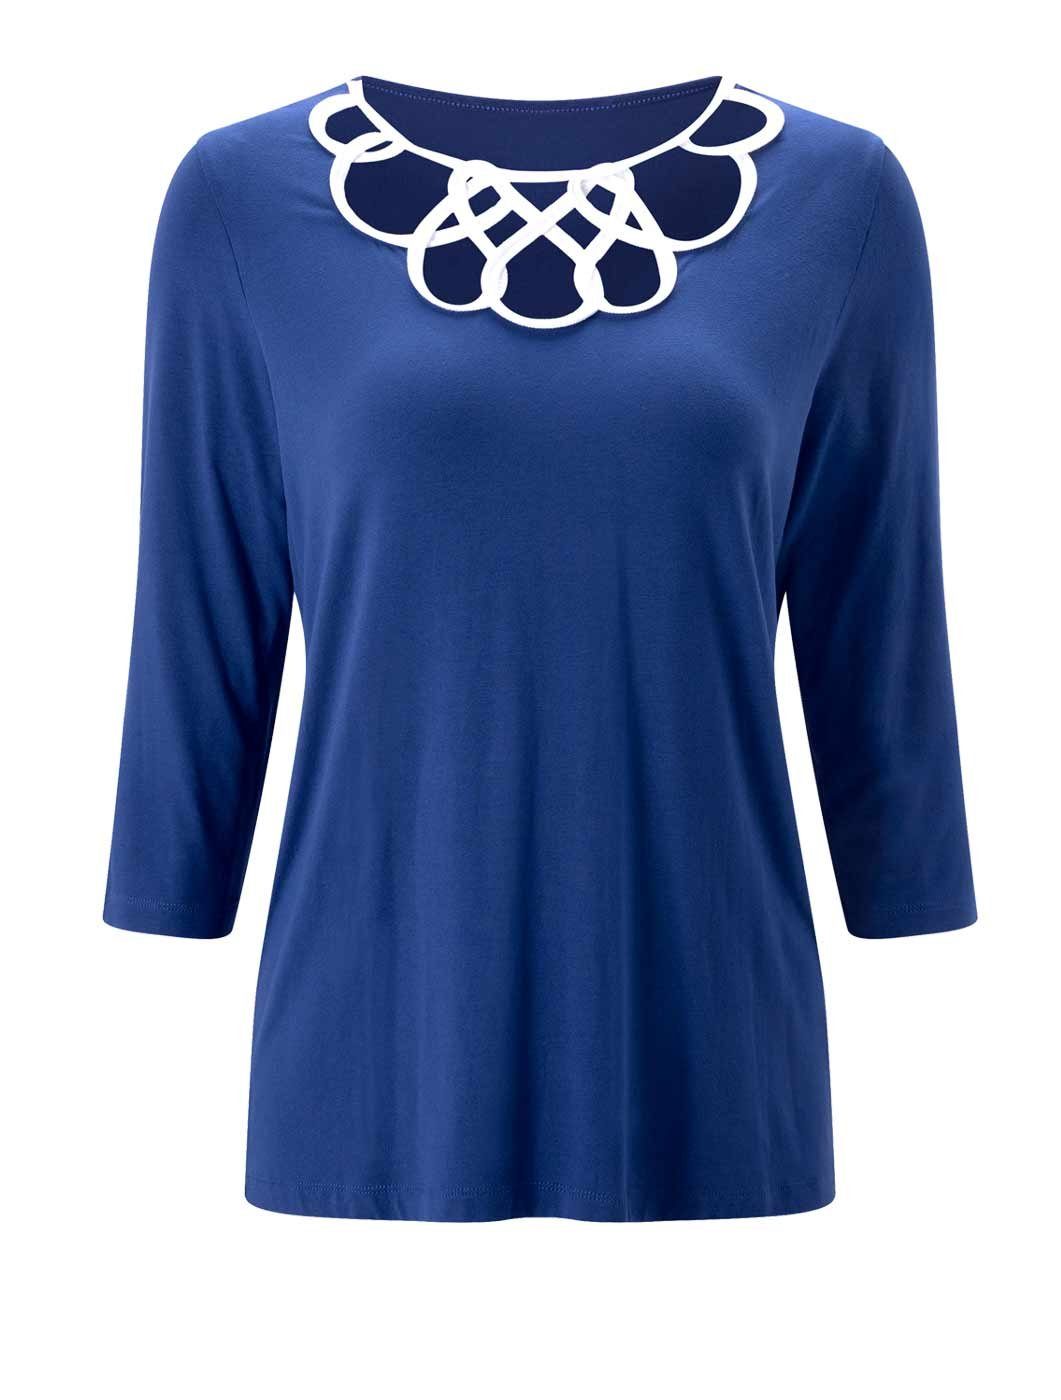 [Versandgebühr 0 Yen] creation L T-Shirt CRéATION royalblau-weiß Damen Jerseyshirt, L